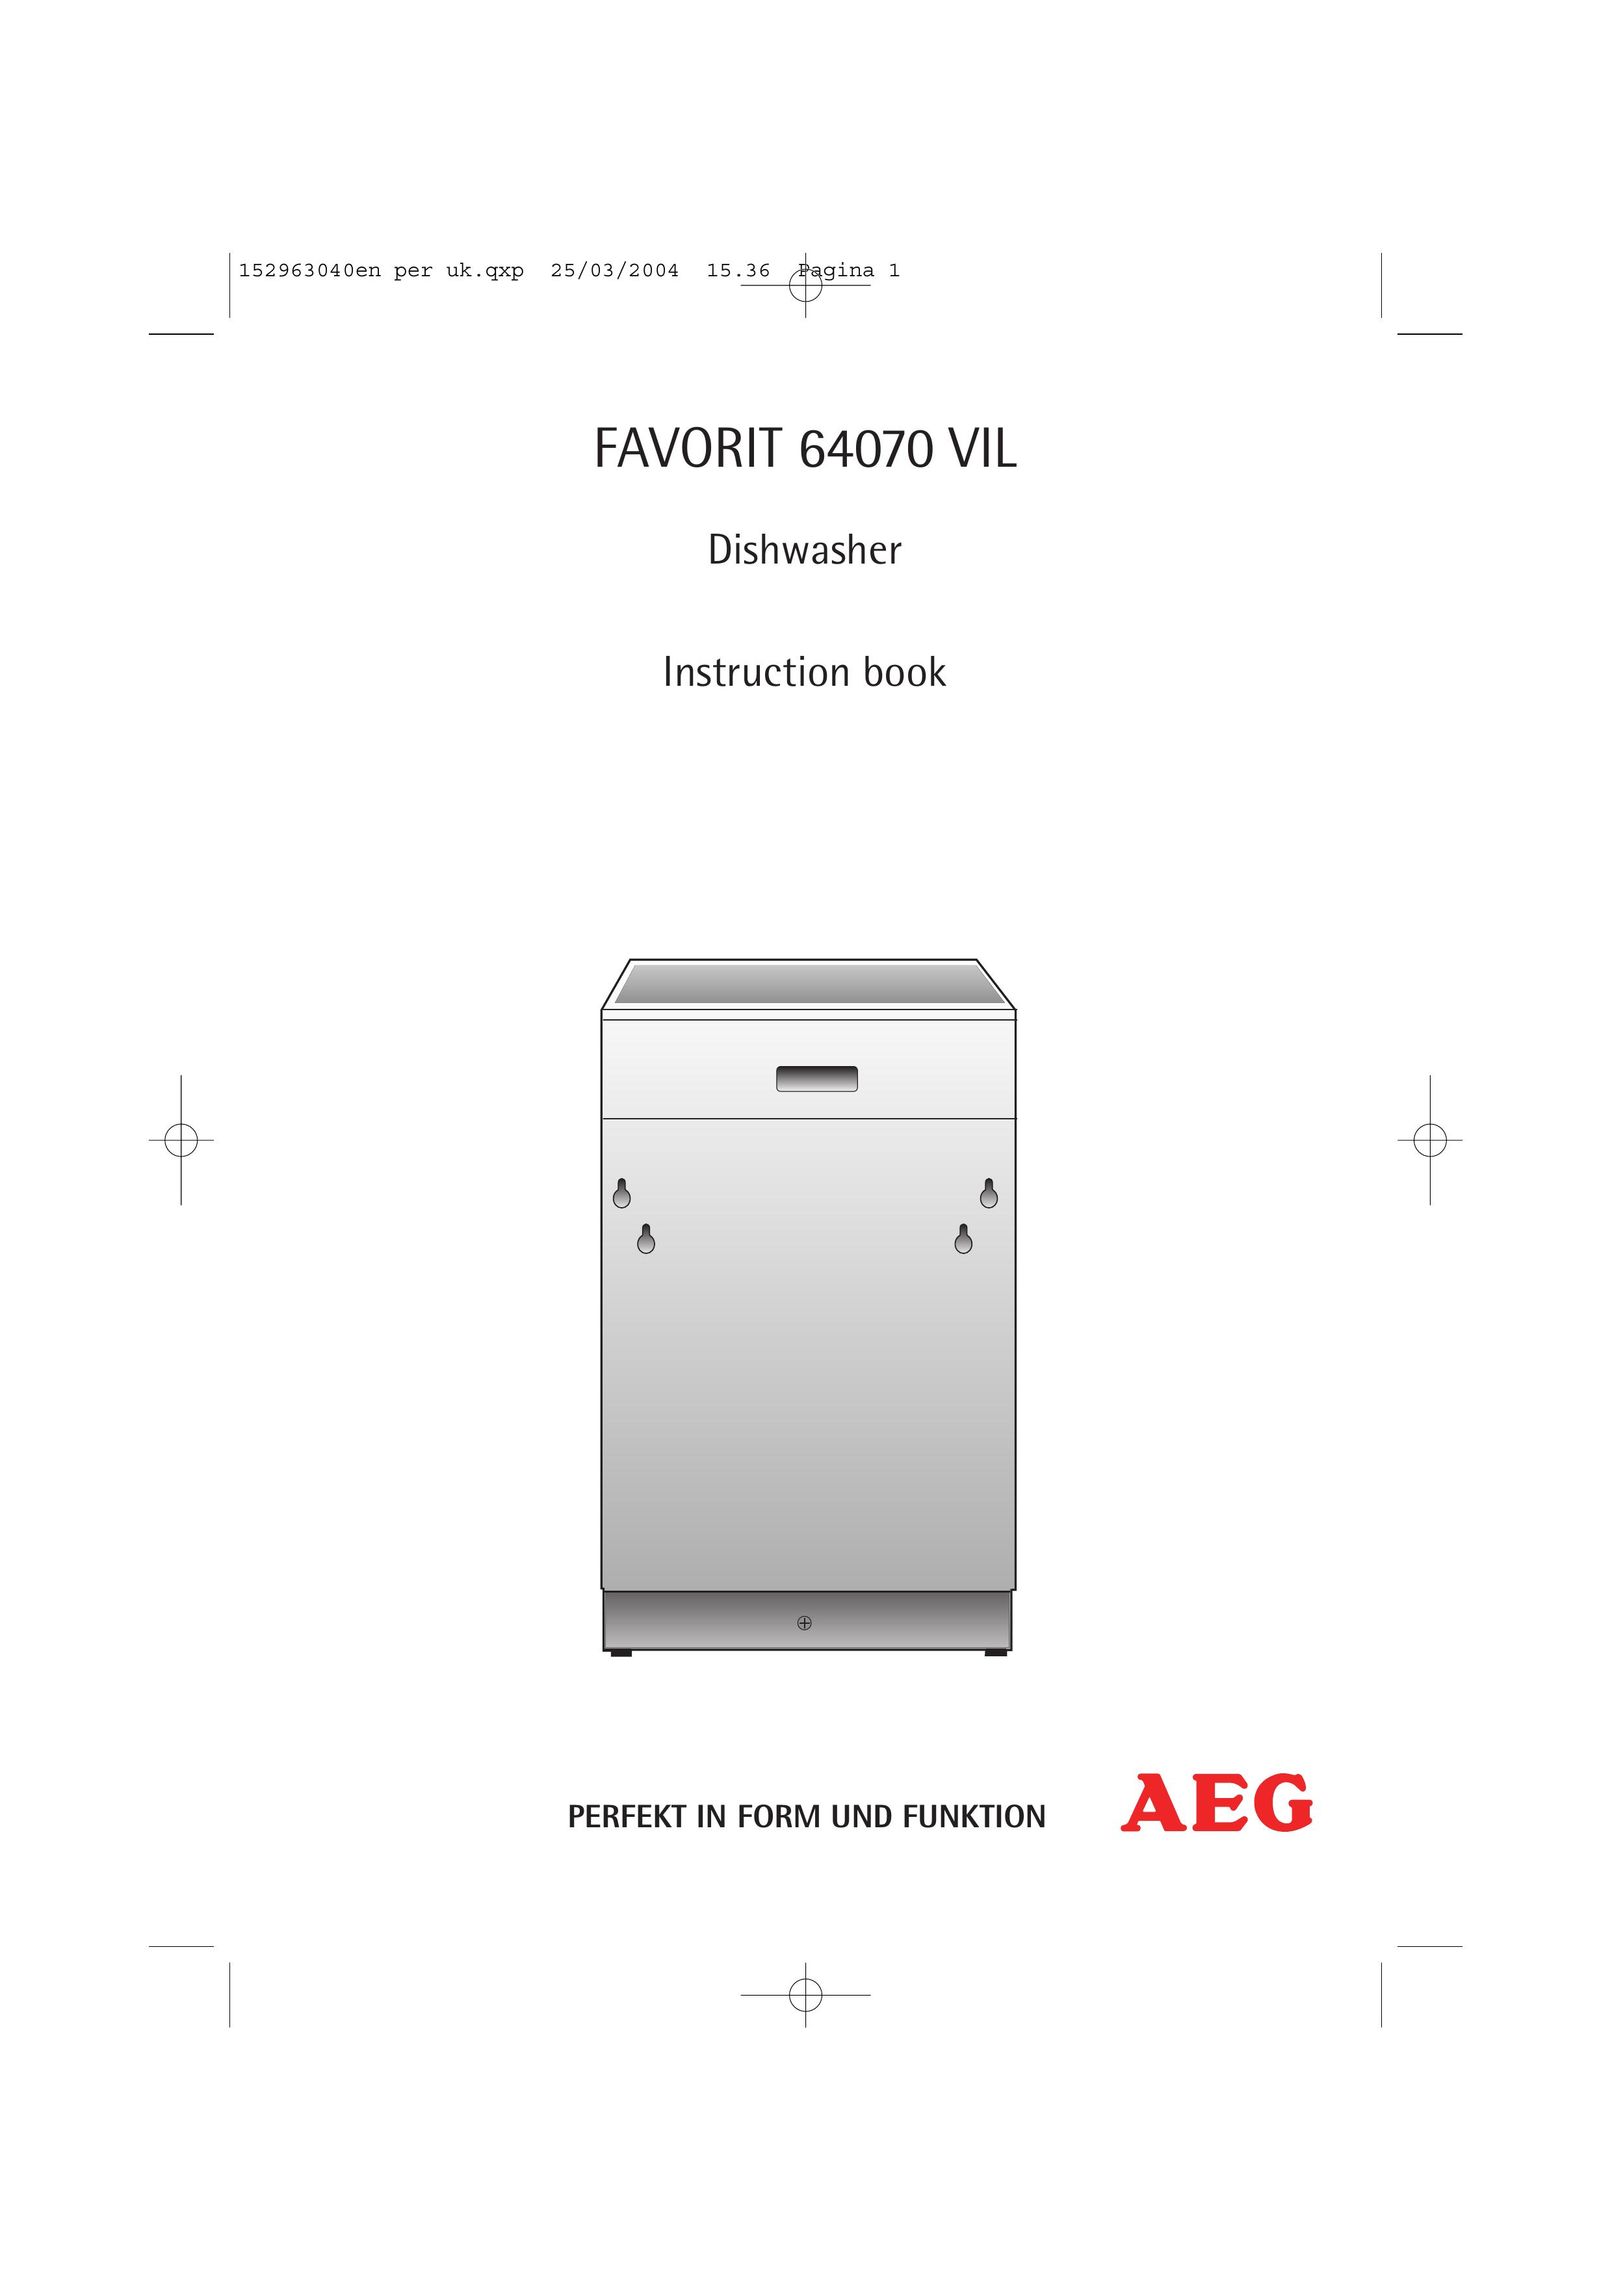 AEG 64070 VIL Dishwasher User Manual